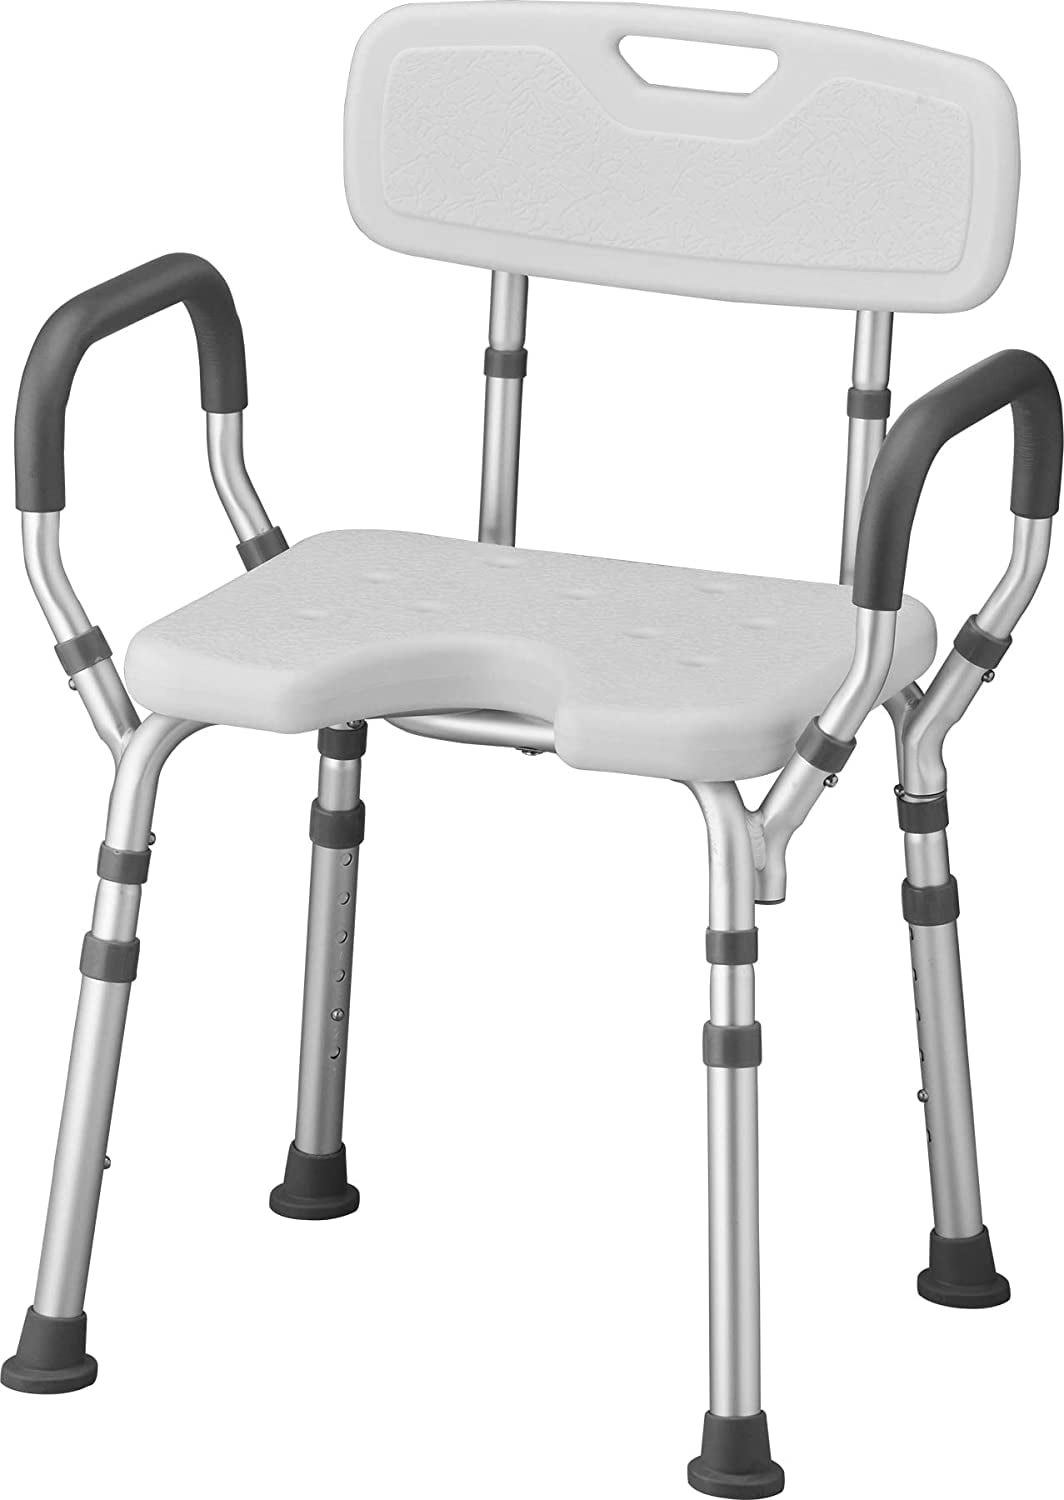 Nova Medical Products Shower Bath Chair With Back Arms Hygienic Design White 1 Count Walmart Com Walmart Com